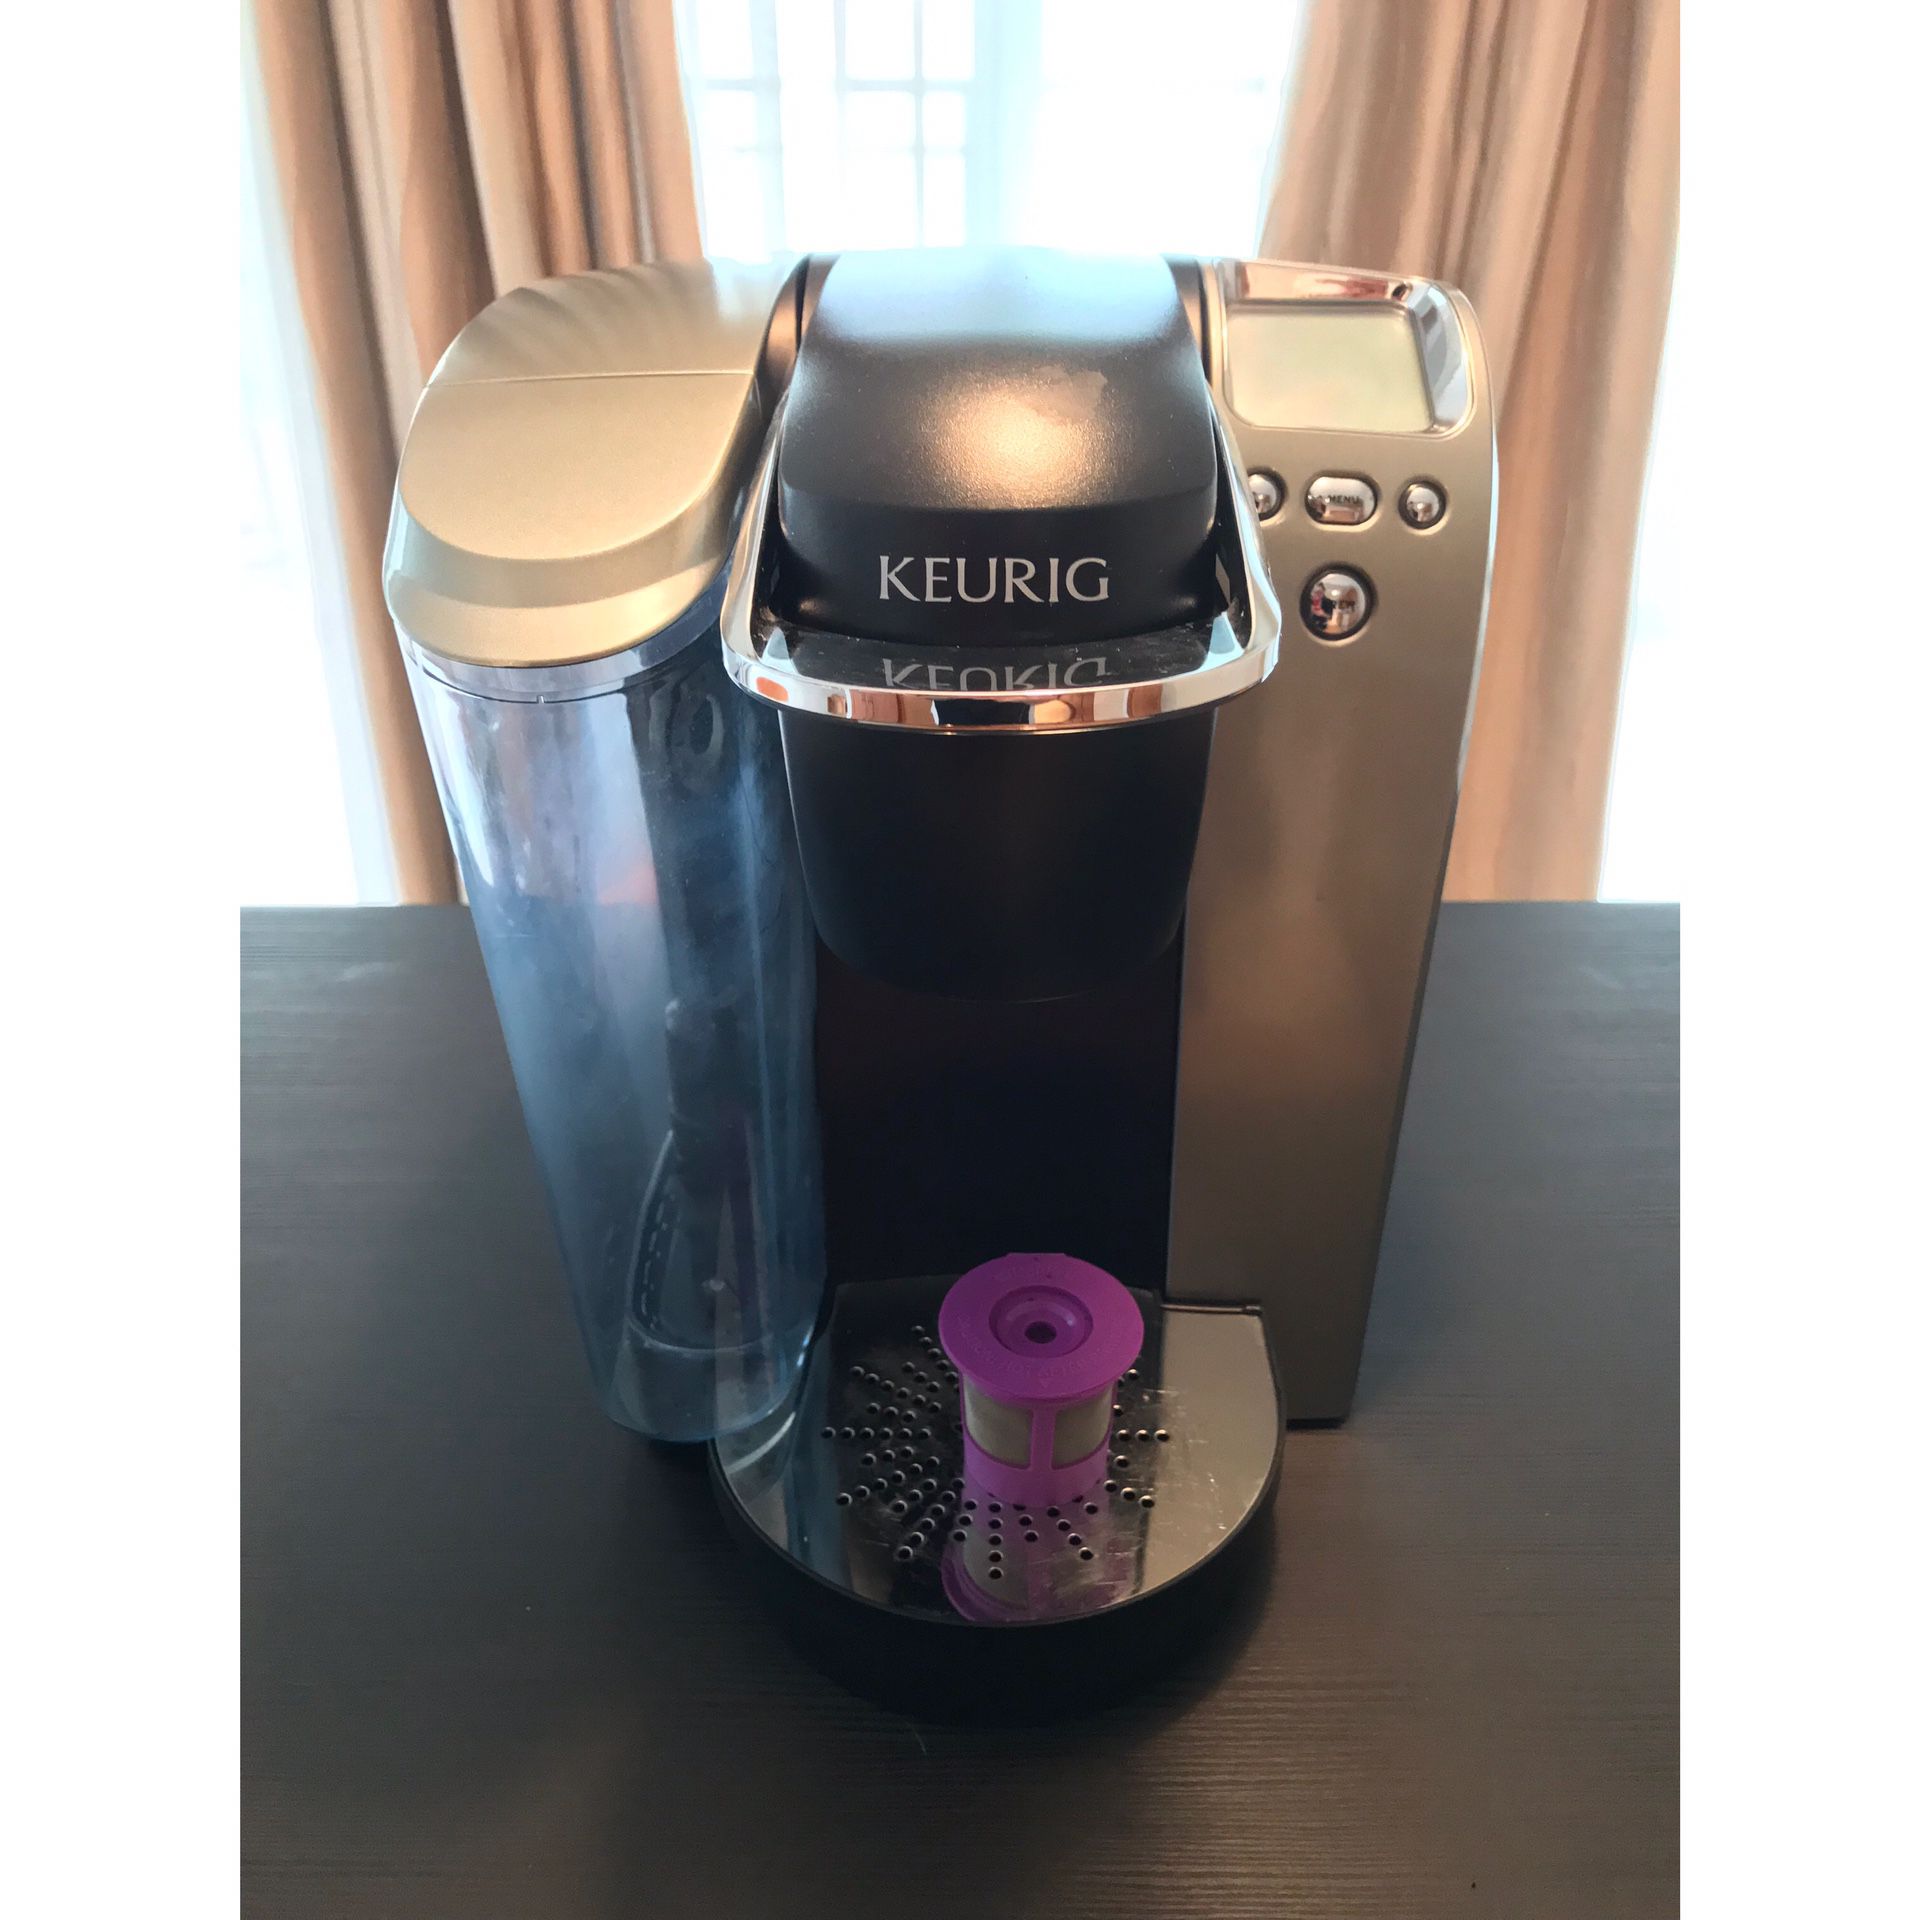 Keurig Single Serve Coffee Maker Model K70 w/ Reusable K-cup Filter